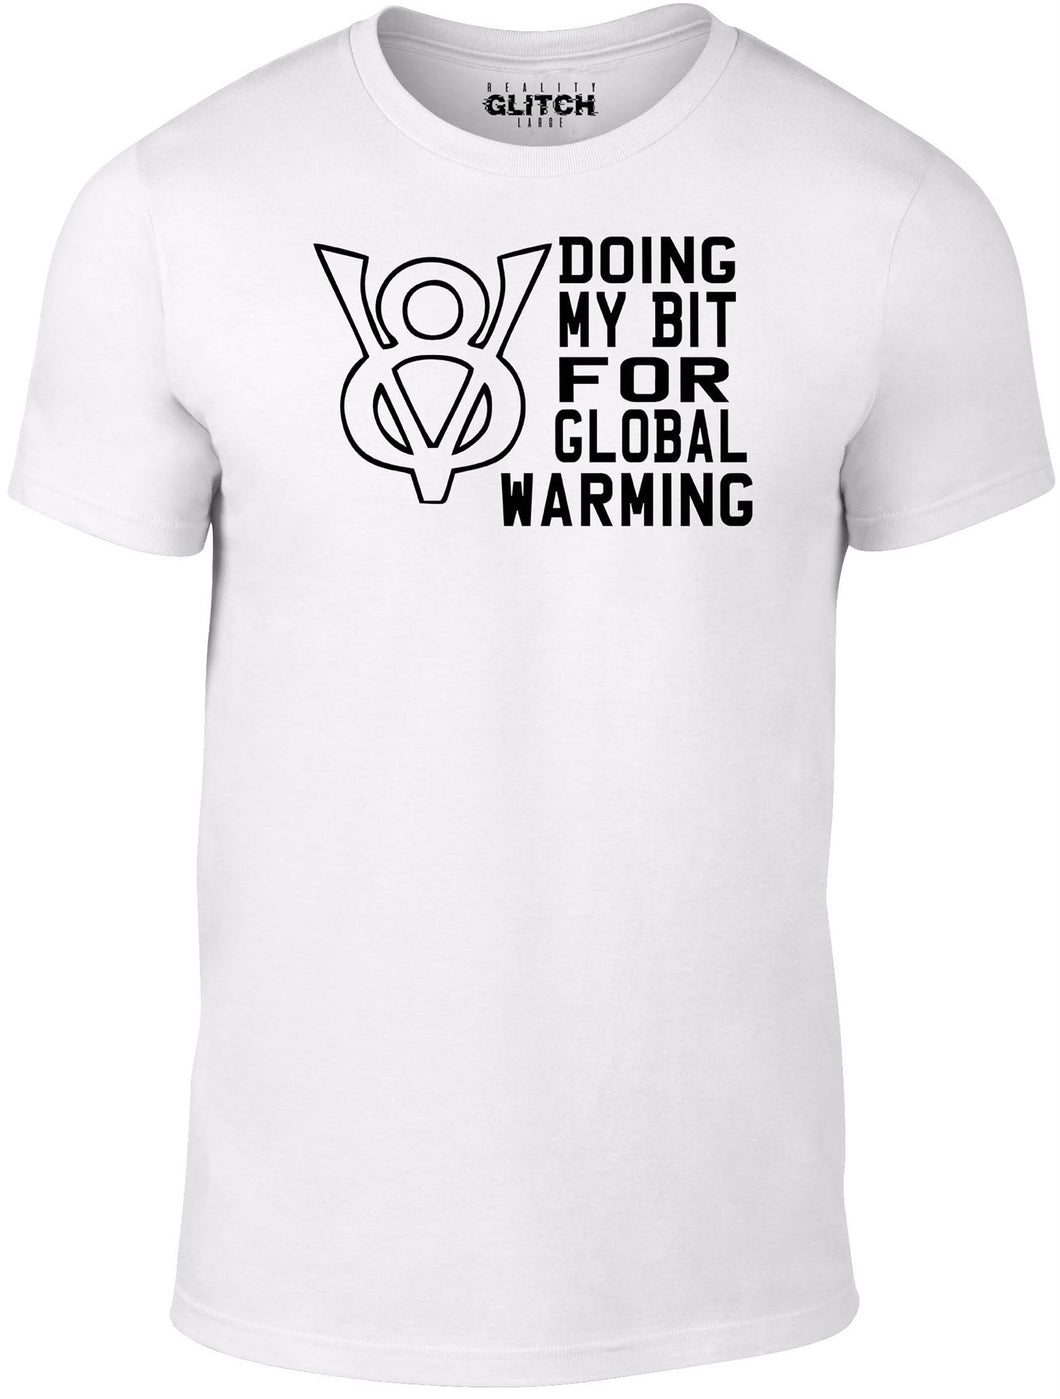 Men's White T-shirt With a V8 engine Printed Design